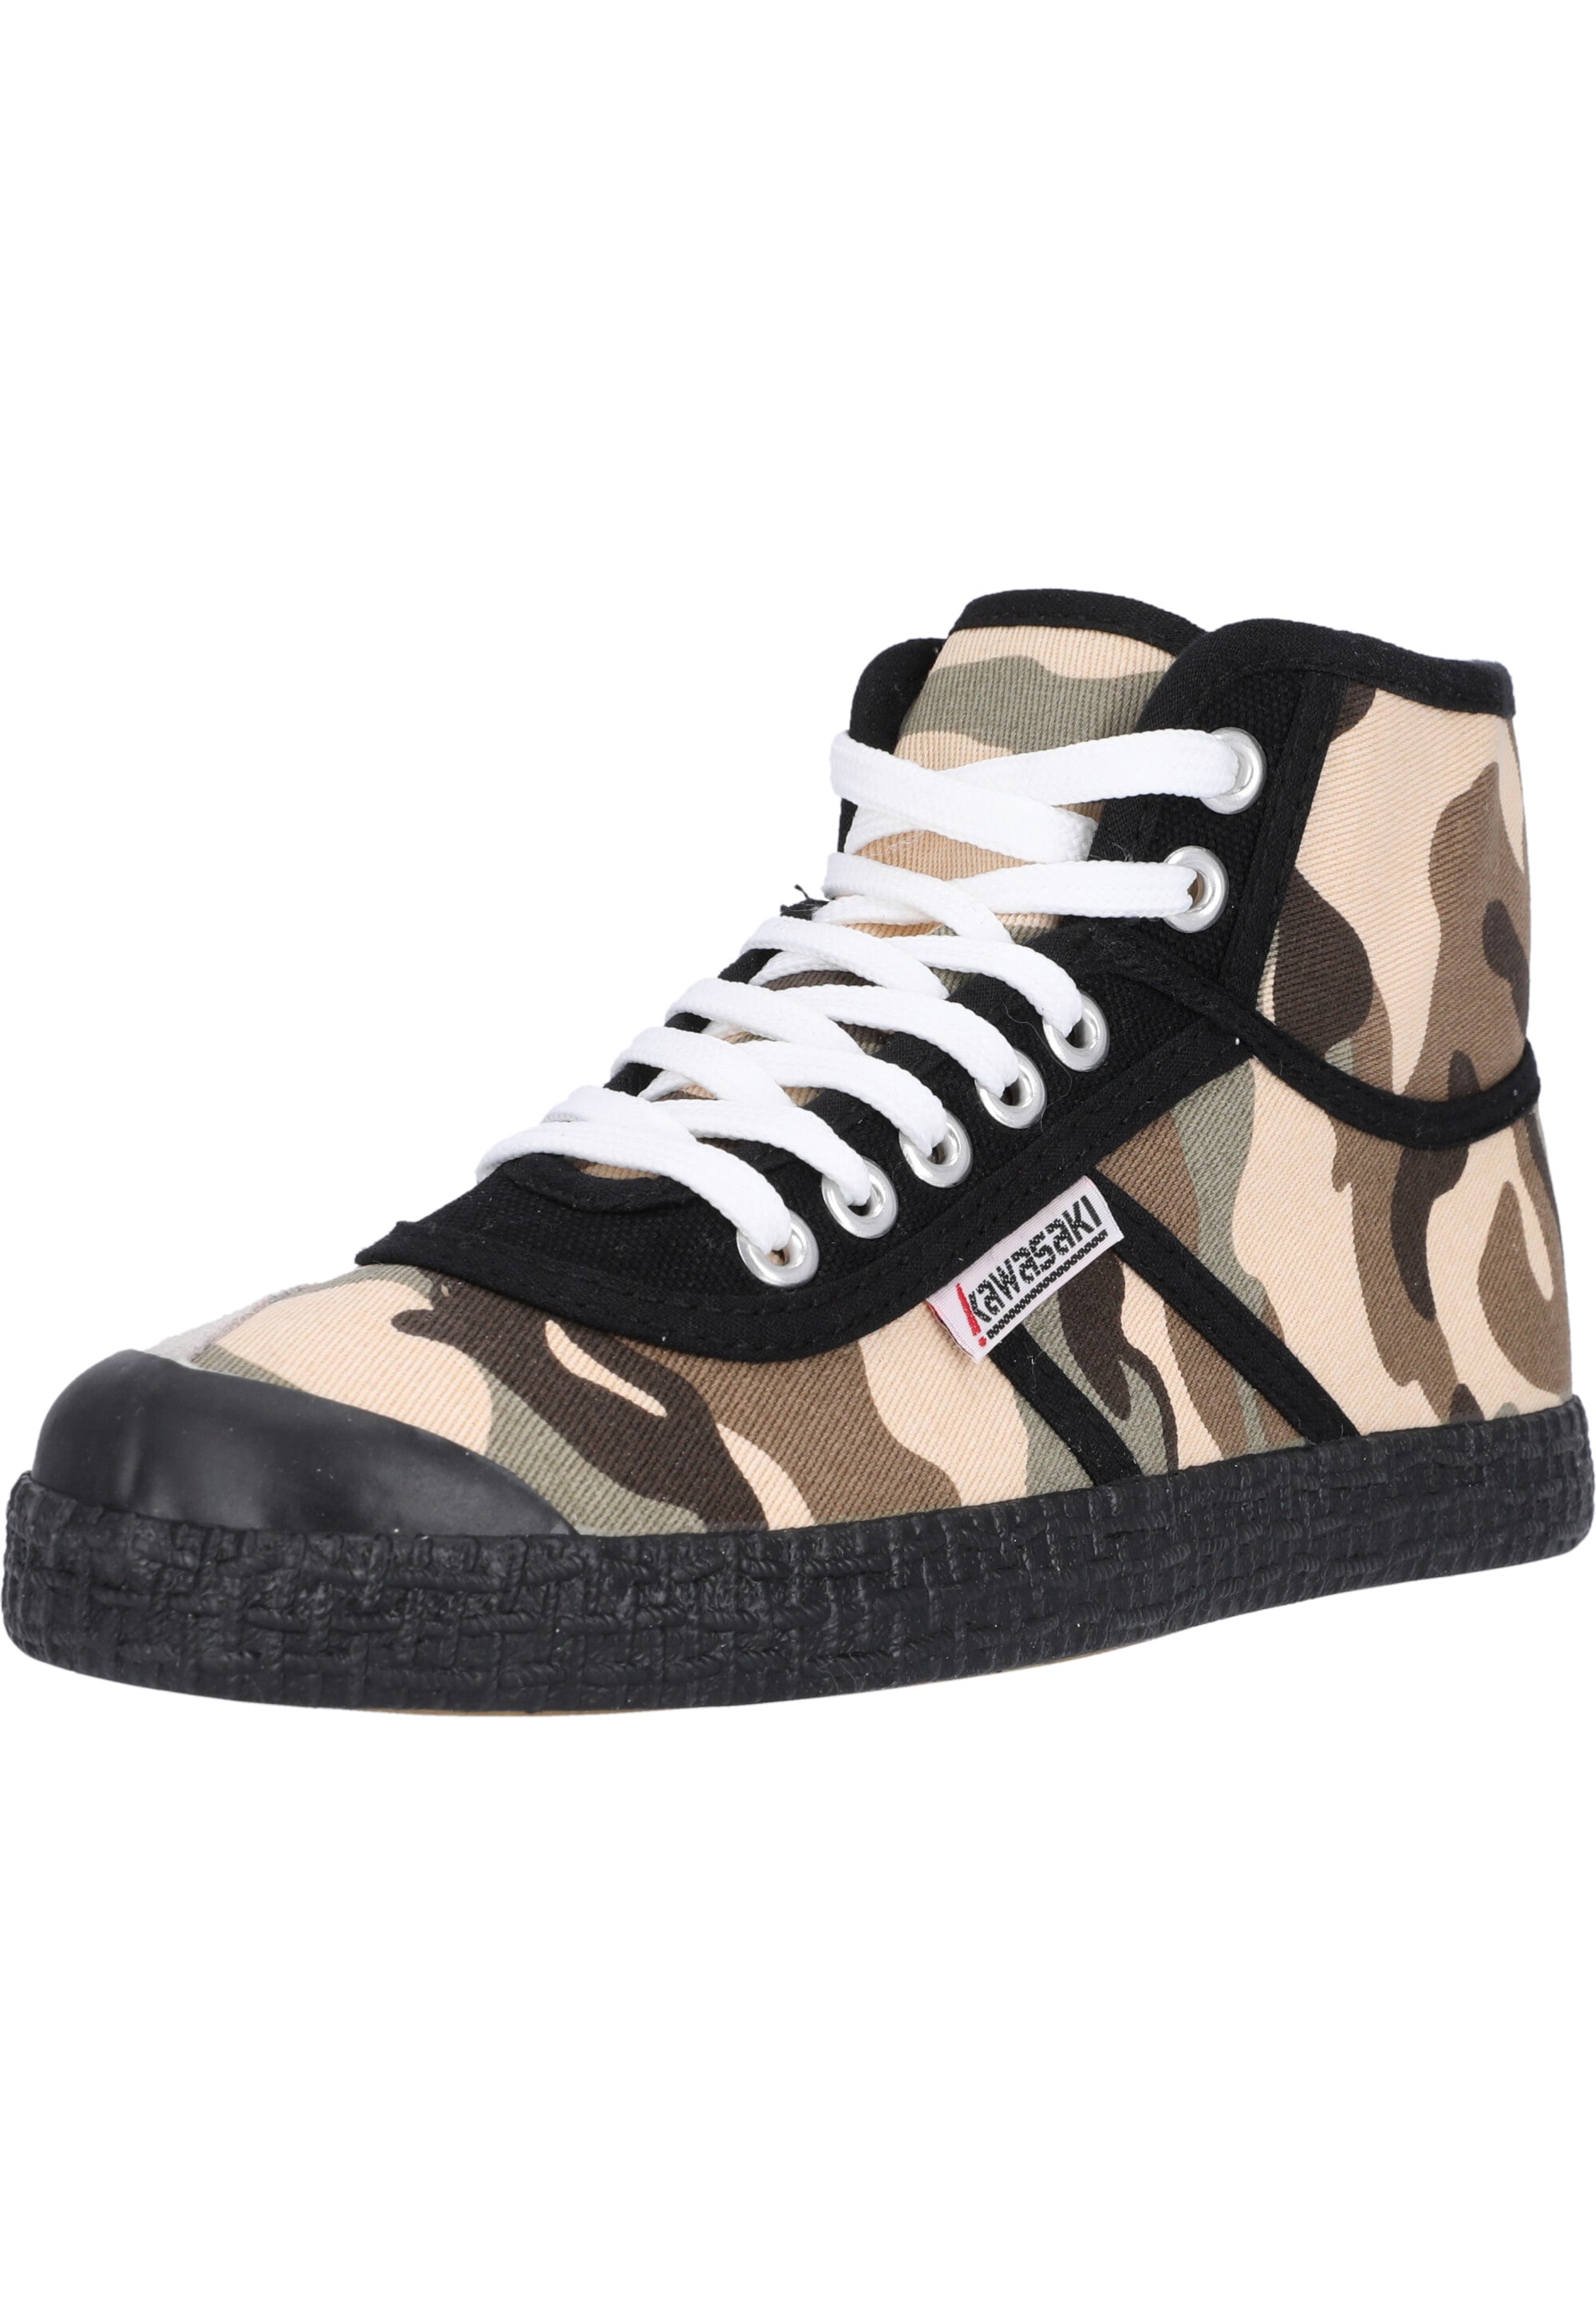 Sneaker »Camo«, in angesagtem Military-Design